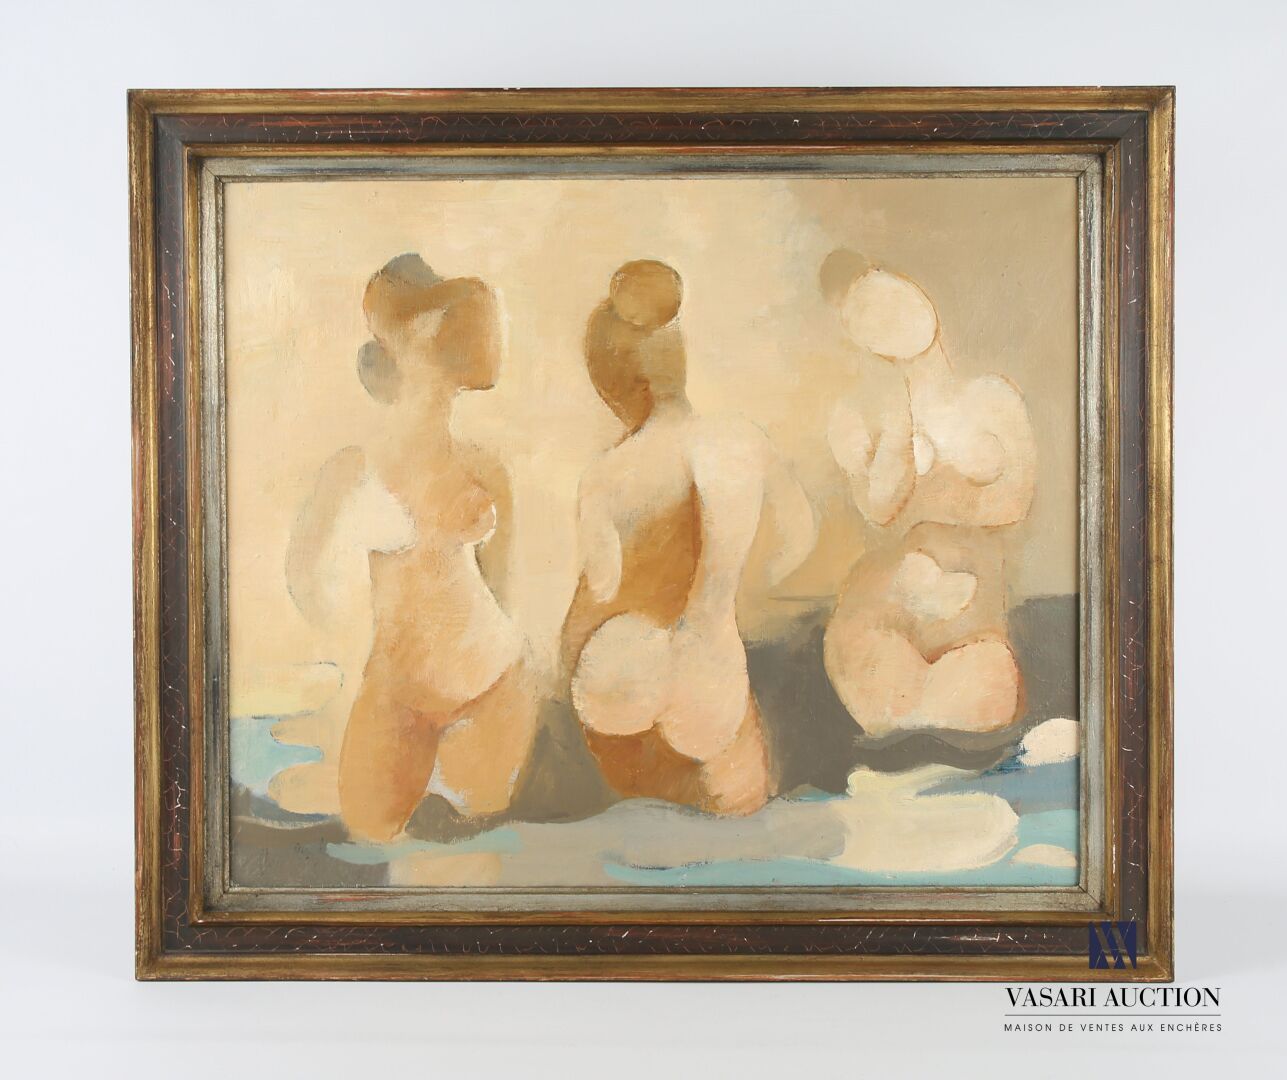 Null 鲁伊斯-皮波-马诺洛(1929-1999)
三种恩典
布面油画
左下方有签名的痕迹
54 x 65厘米
有框作品